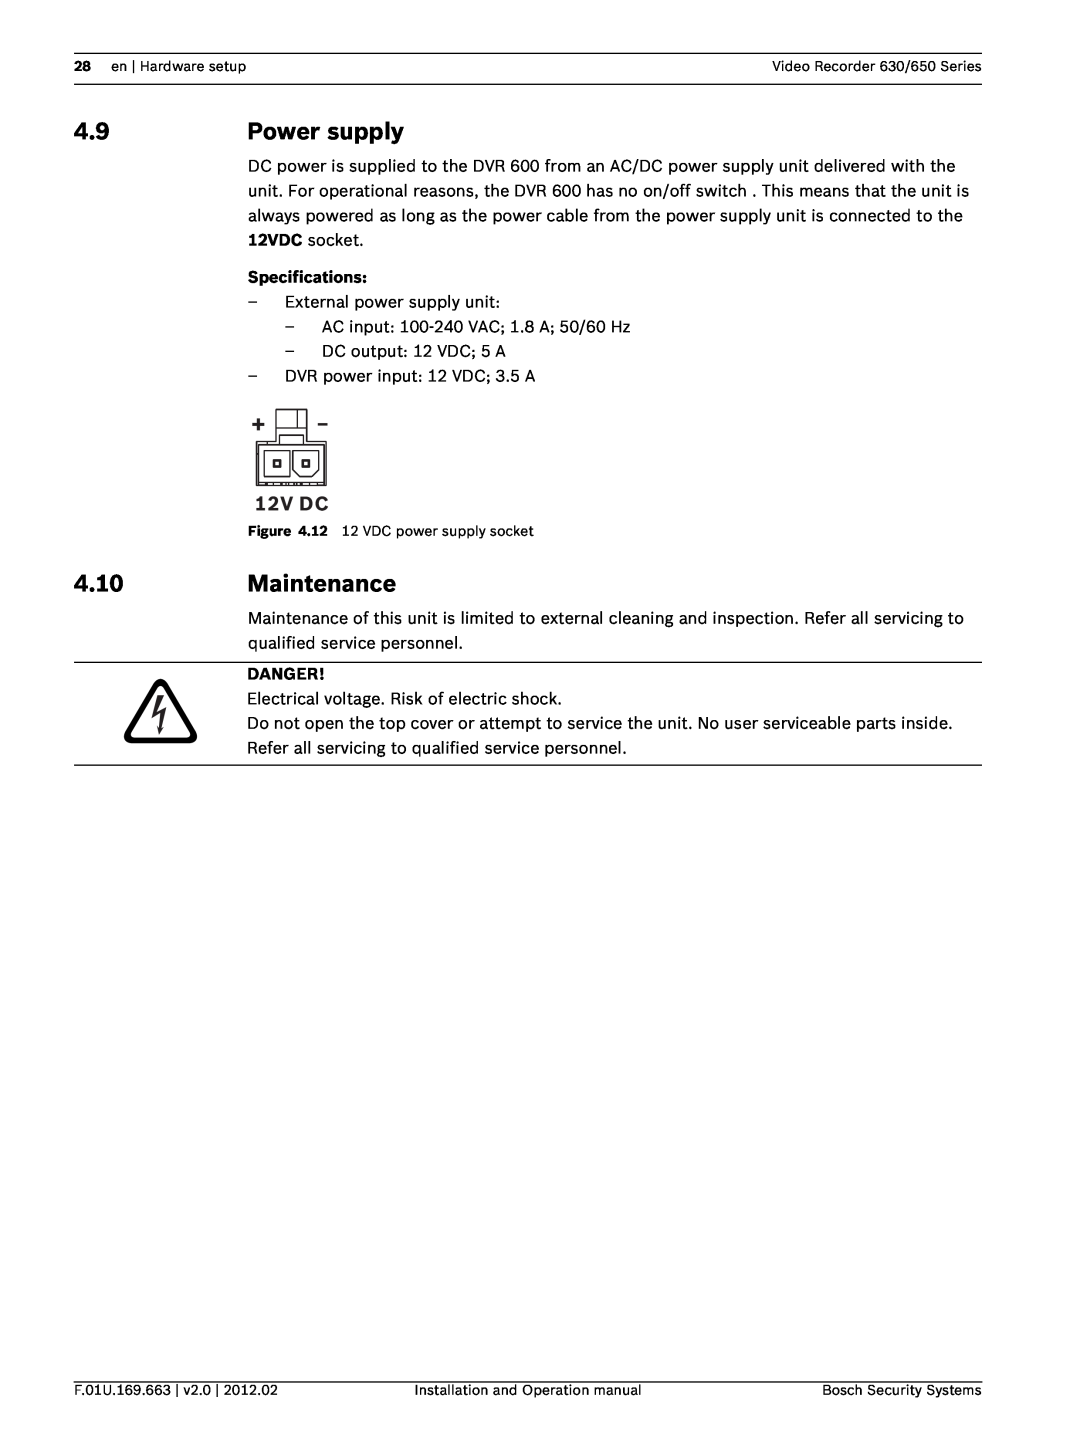 Bosch Appliances 650, 630 operation manual 4.9Power supply, 4.10Maintenance, Specifications, Danger 